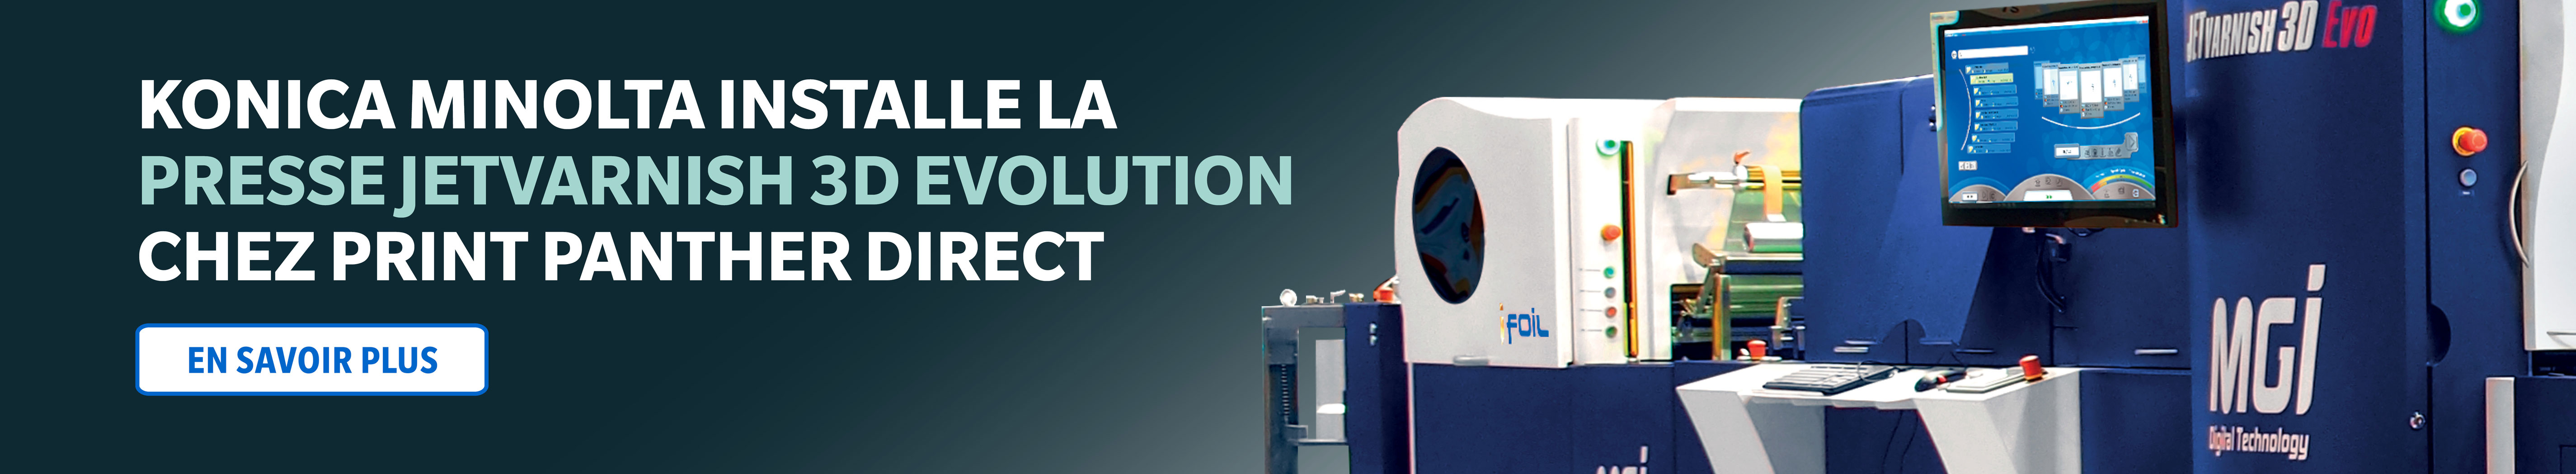 Konica Minolta installe la presse JETvarnish 3D Evolution chez Print Panther Direct 